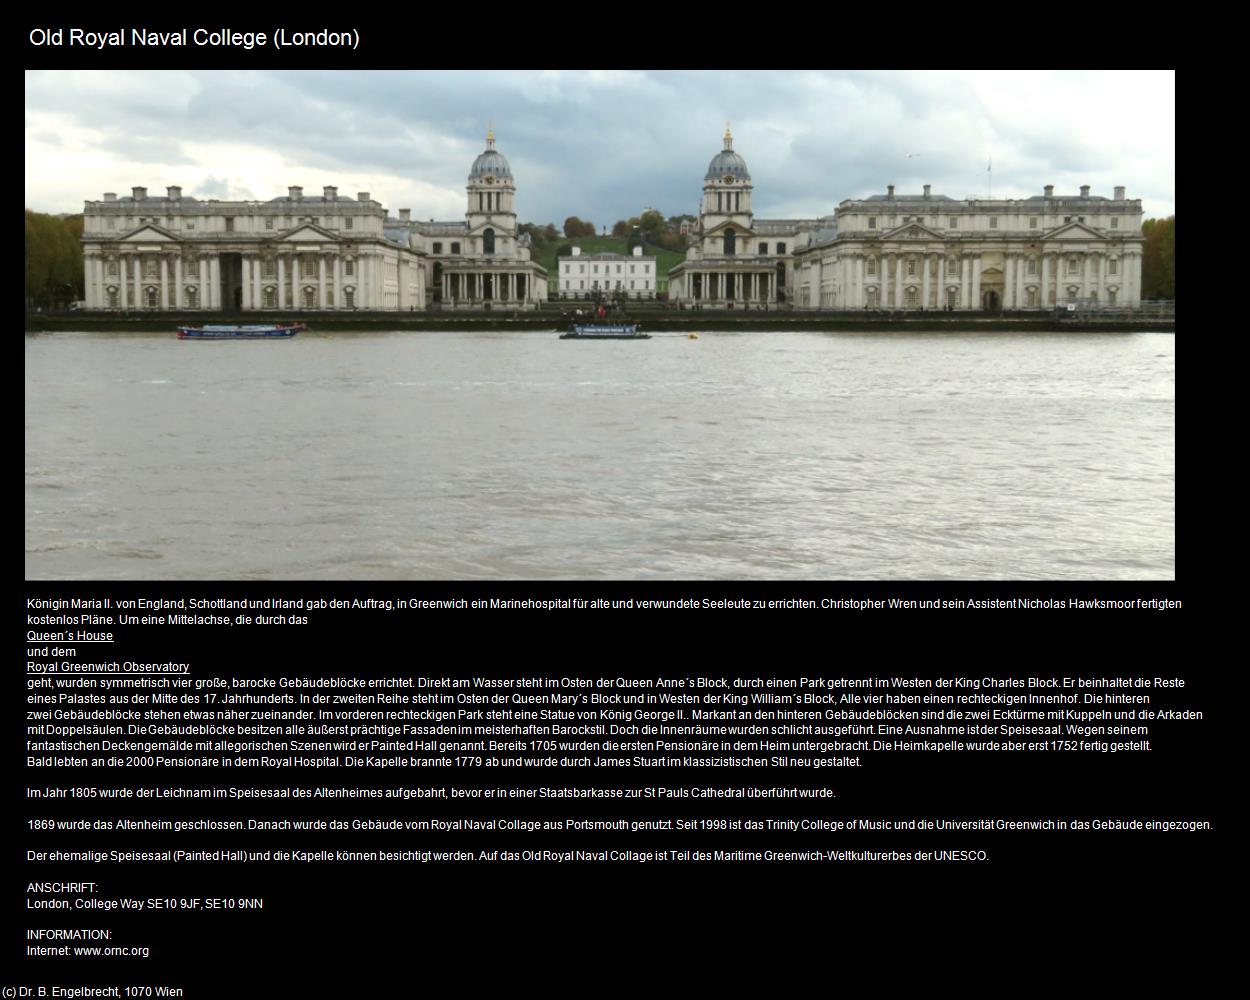 Old Royal Naval College (Greenwich)  (London, England) in Kulturatlas-ENGLAND und WALES(c)B.Engelbrecht